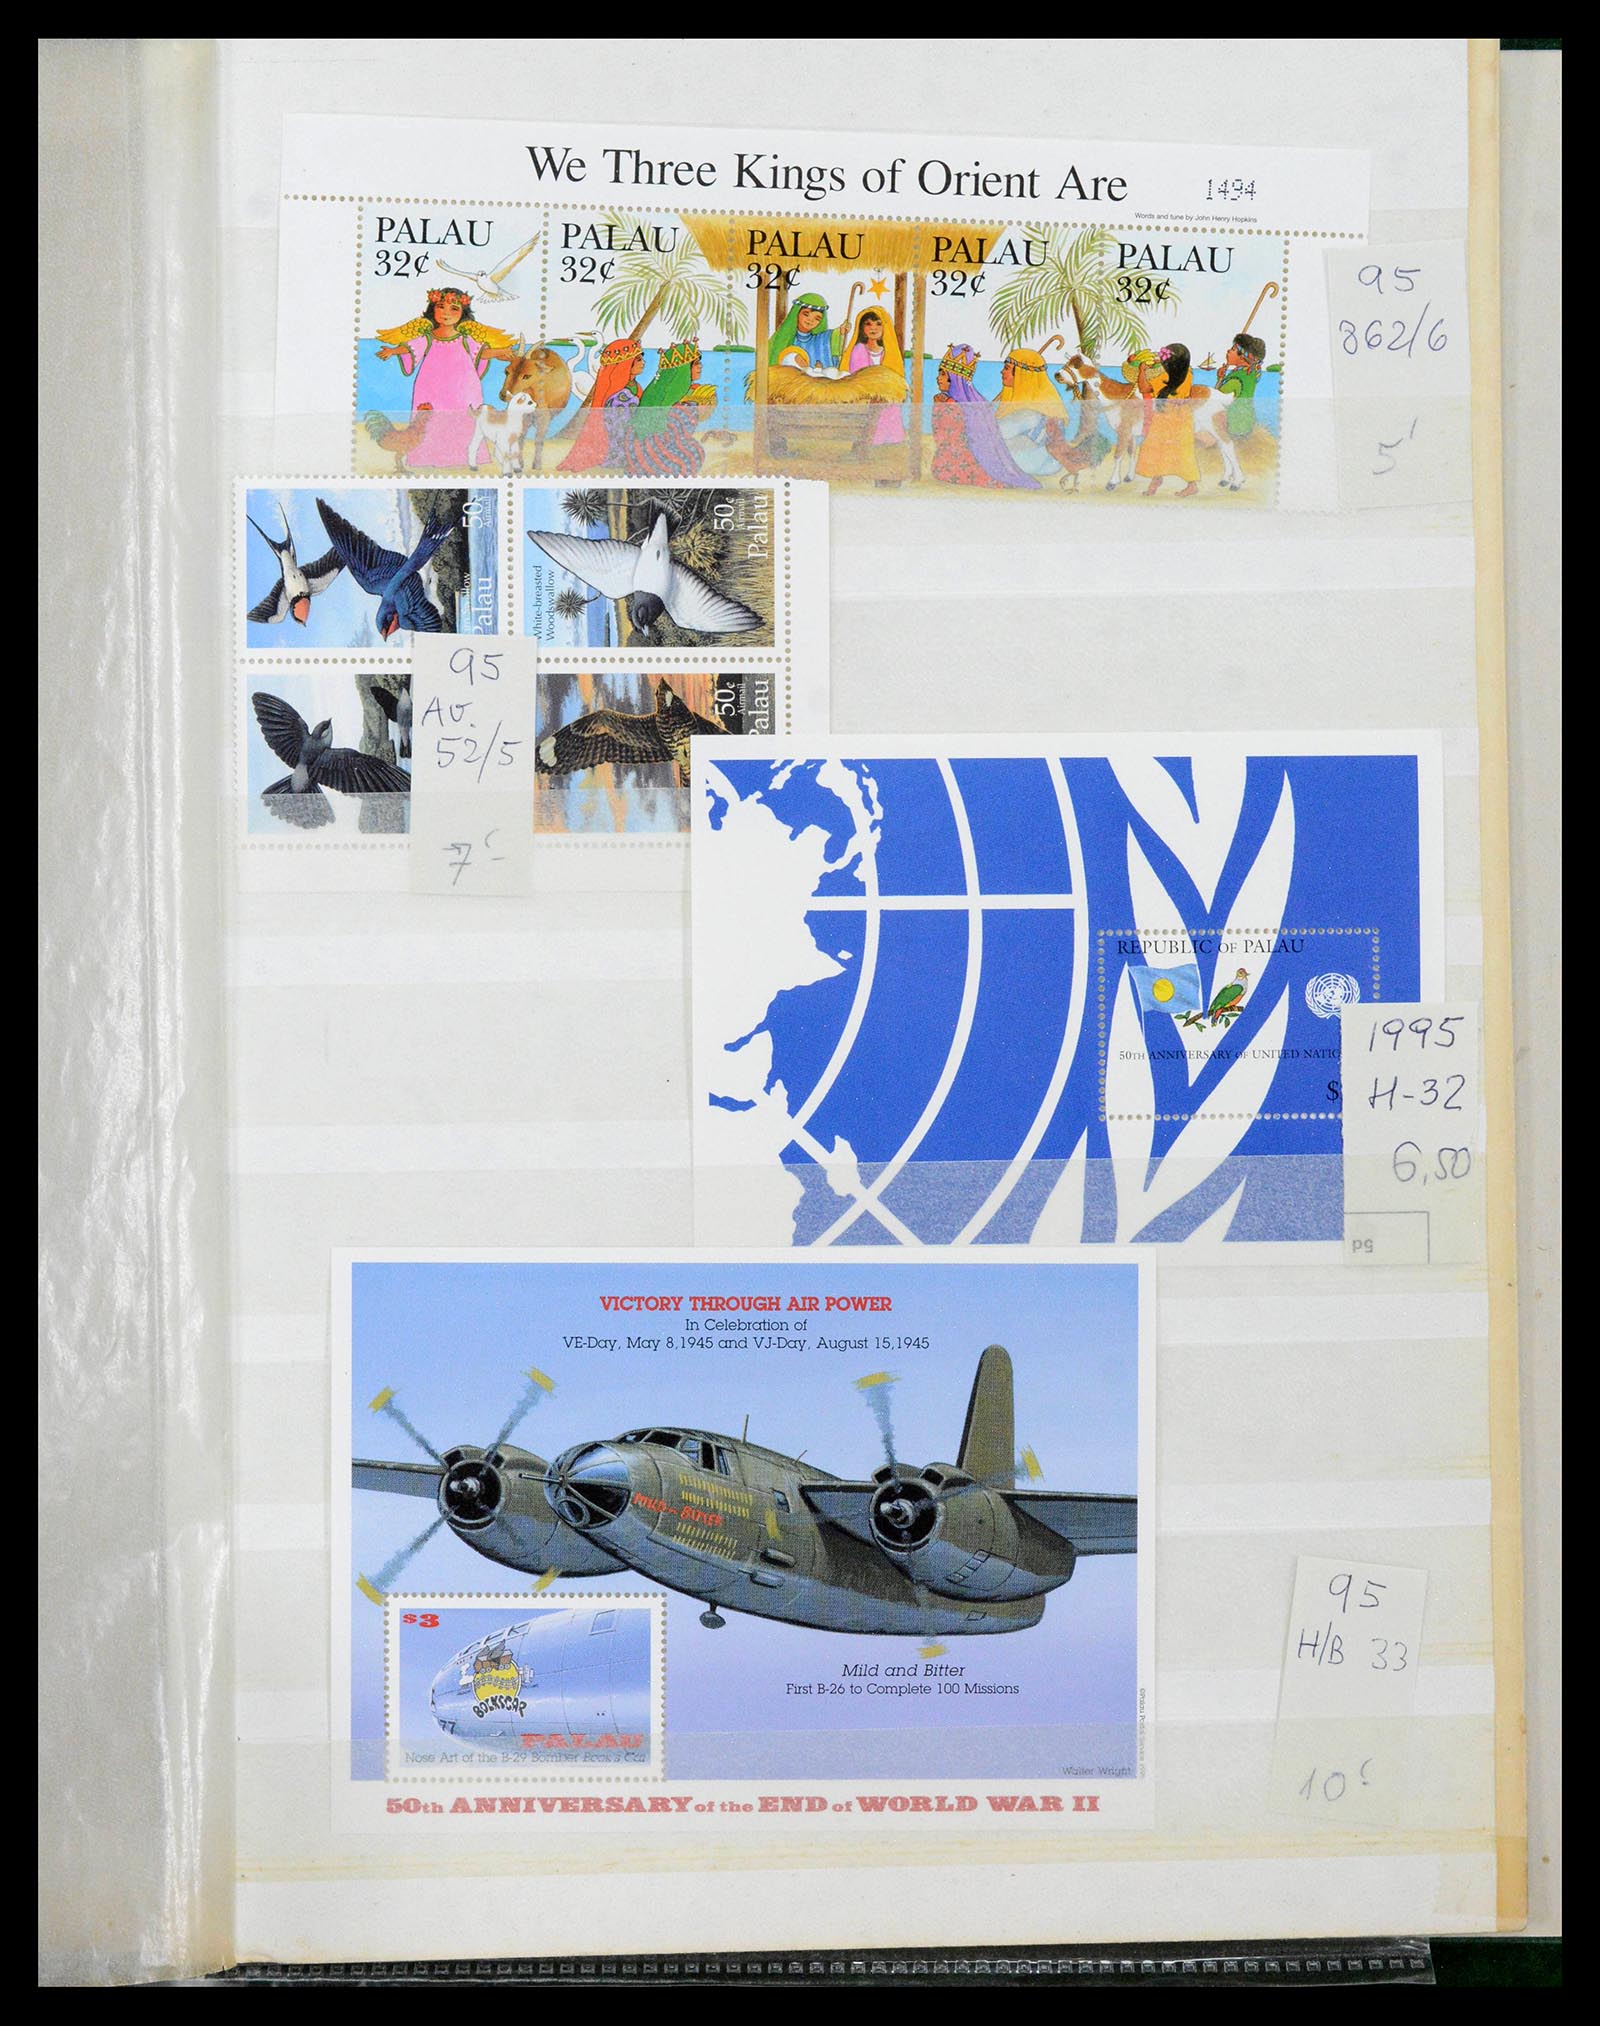 39222 0063 - Stamp collection 39222 Palau, Micronesia and Marshall islands 1980-1995.